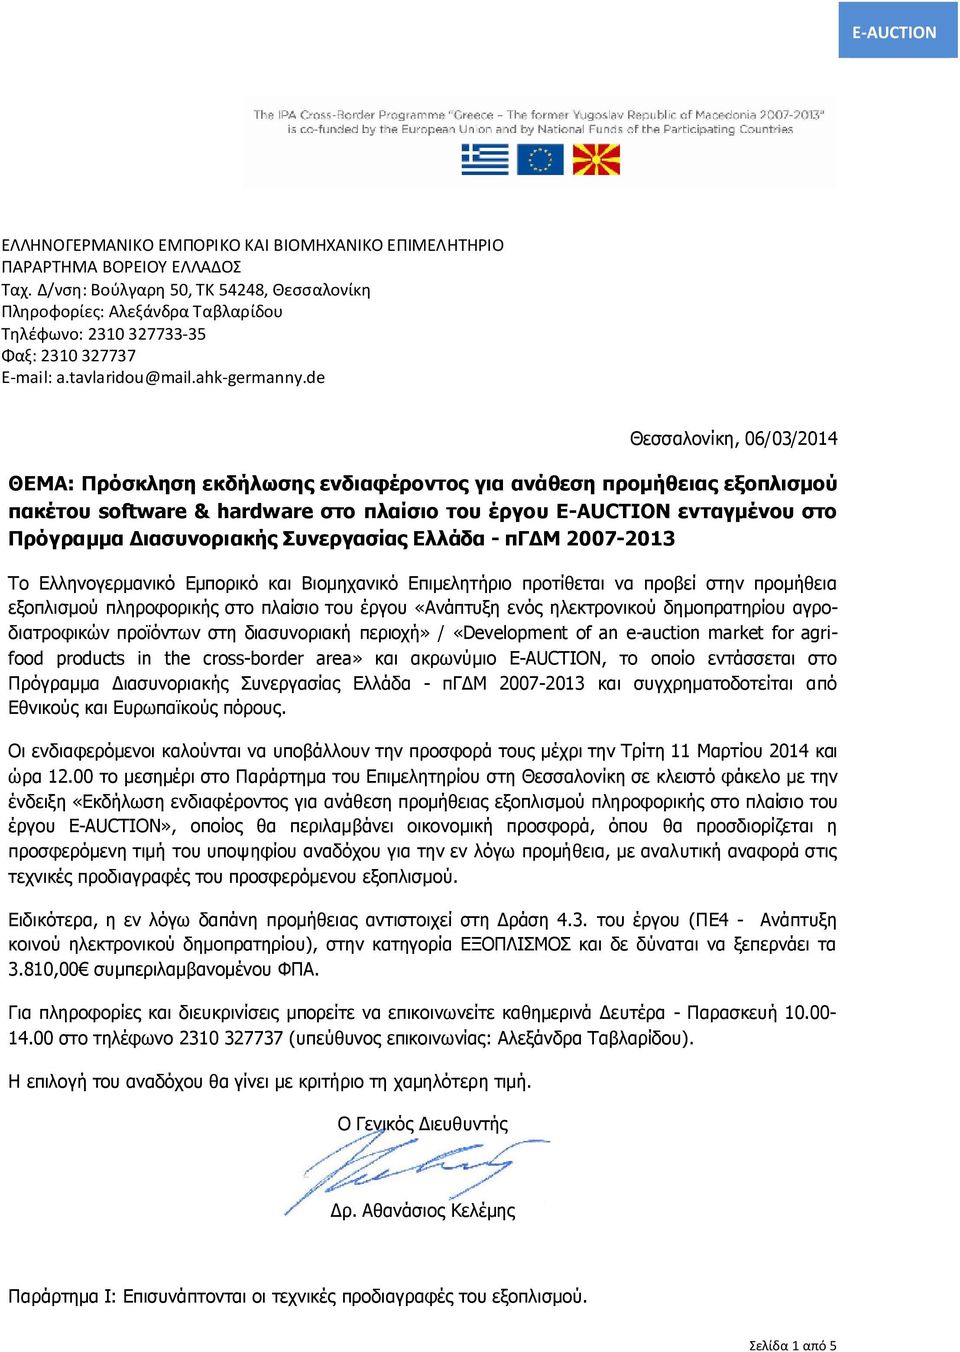 de Θεσσαλονίκη, 06/03/2014 ΘΕΜΑ: Πρόσκληση εκδήλωσης ενδιαφέροντος για ανάθεση προμήθειας εξοπλισμού πακέτου software & hardware στο πλαίσιο του έργου E-AUCTION ενταγμένου στο Πρόγραμμα Διασυνοριακής